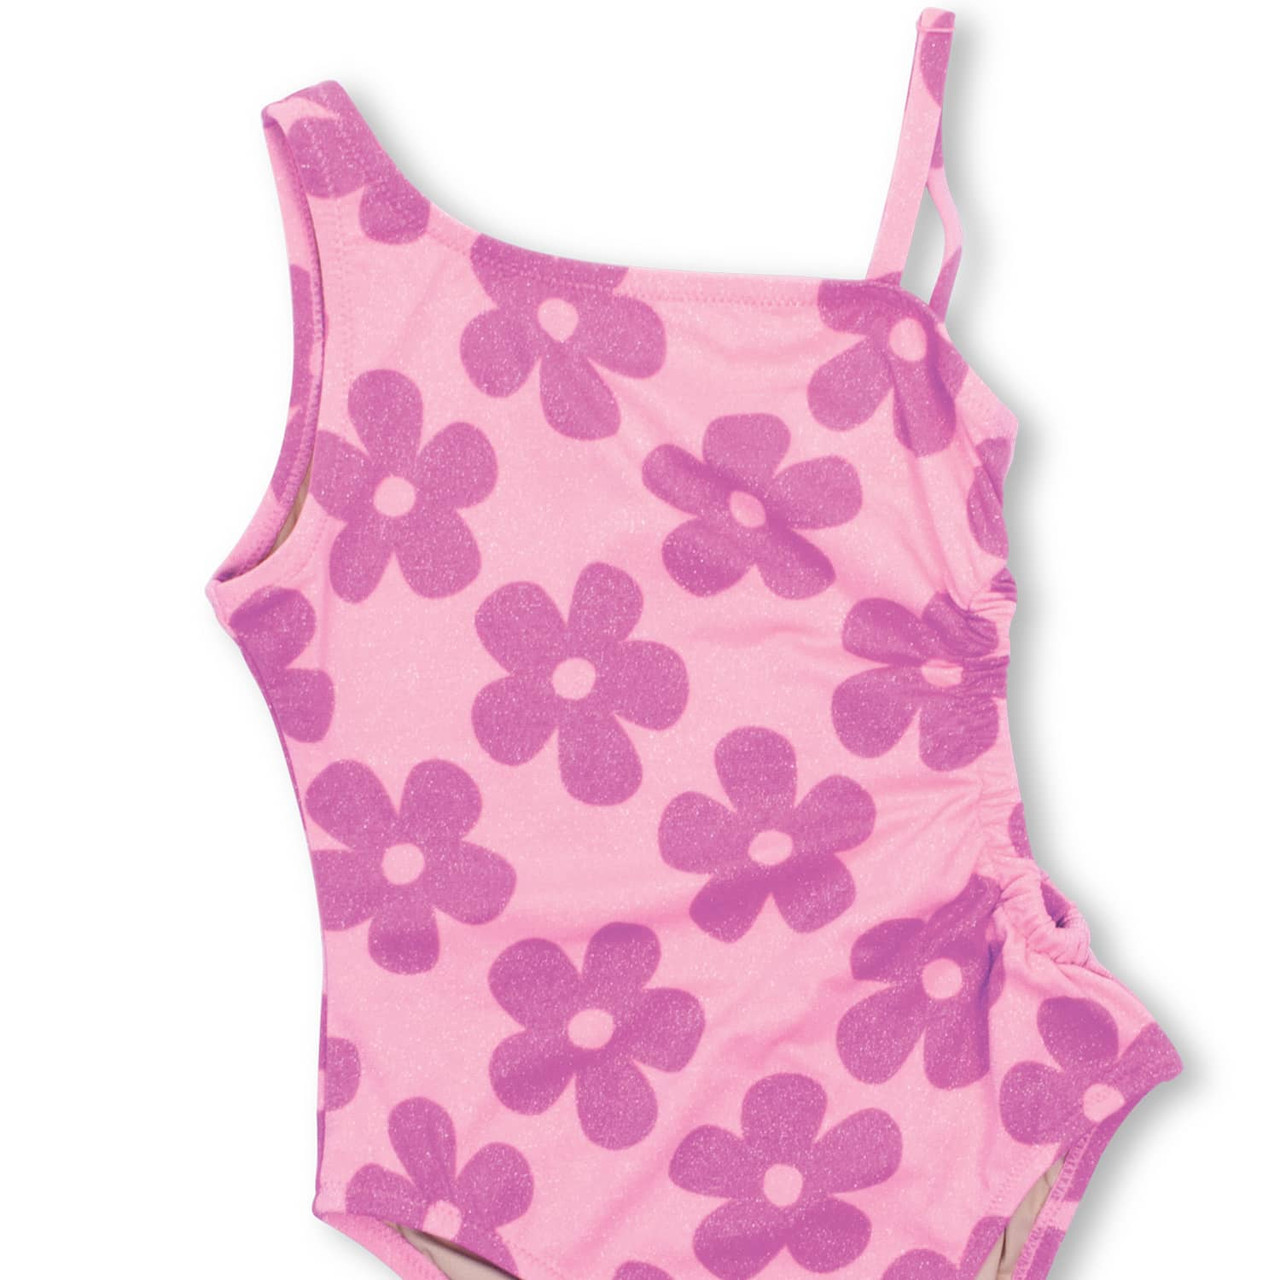 Girls Swim Suits Size 14-16 Beach Sport 2-Piece Outfits Swimsuit Daisy  Girls' Girls Swimwear Kids Bathing Suits